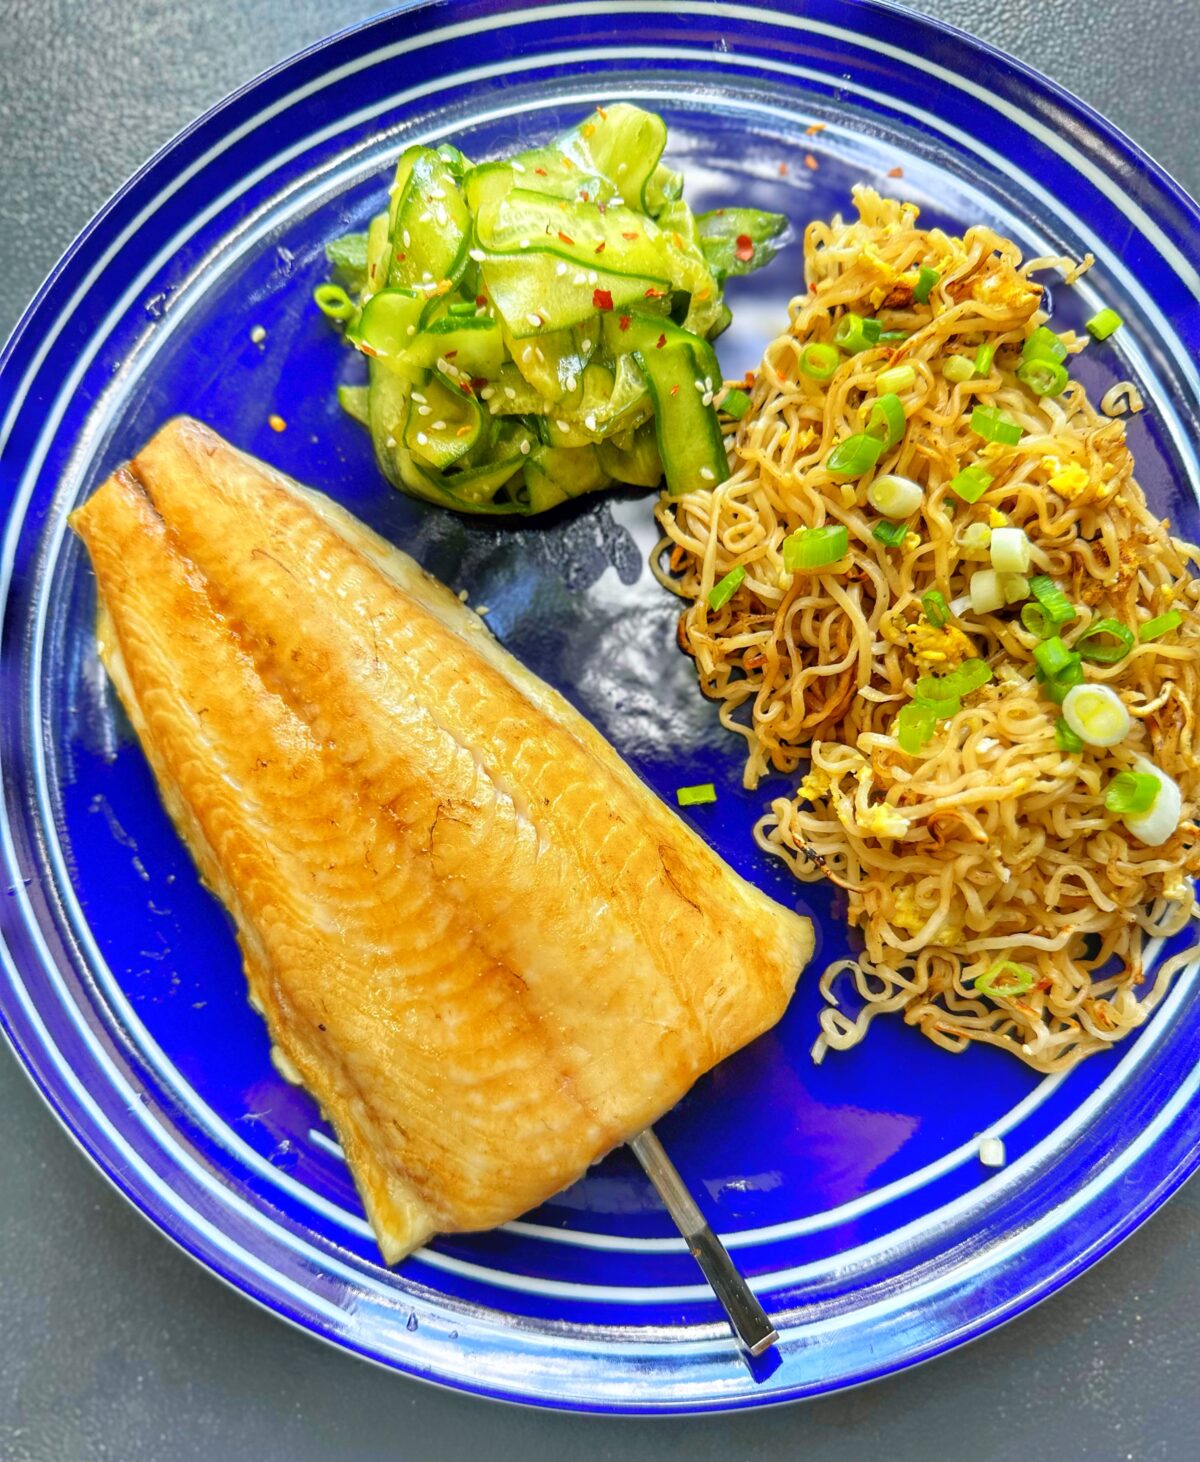 Black cod on a blue platter with stir fried noodles and cucumber salad.